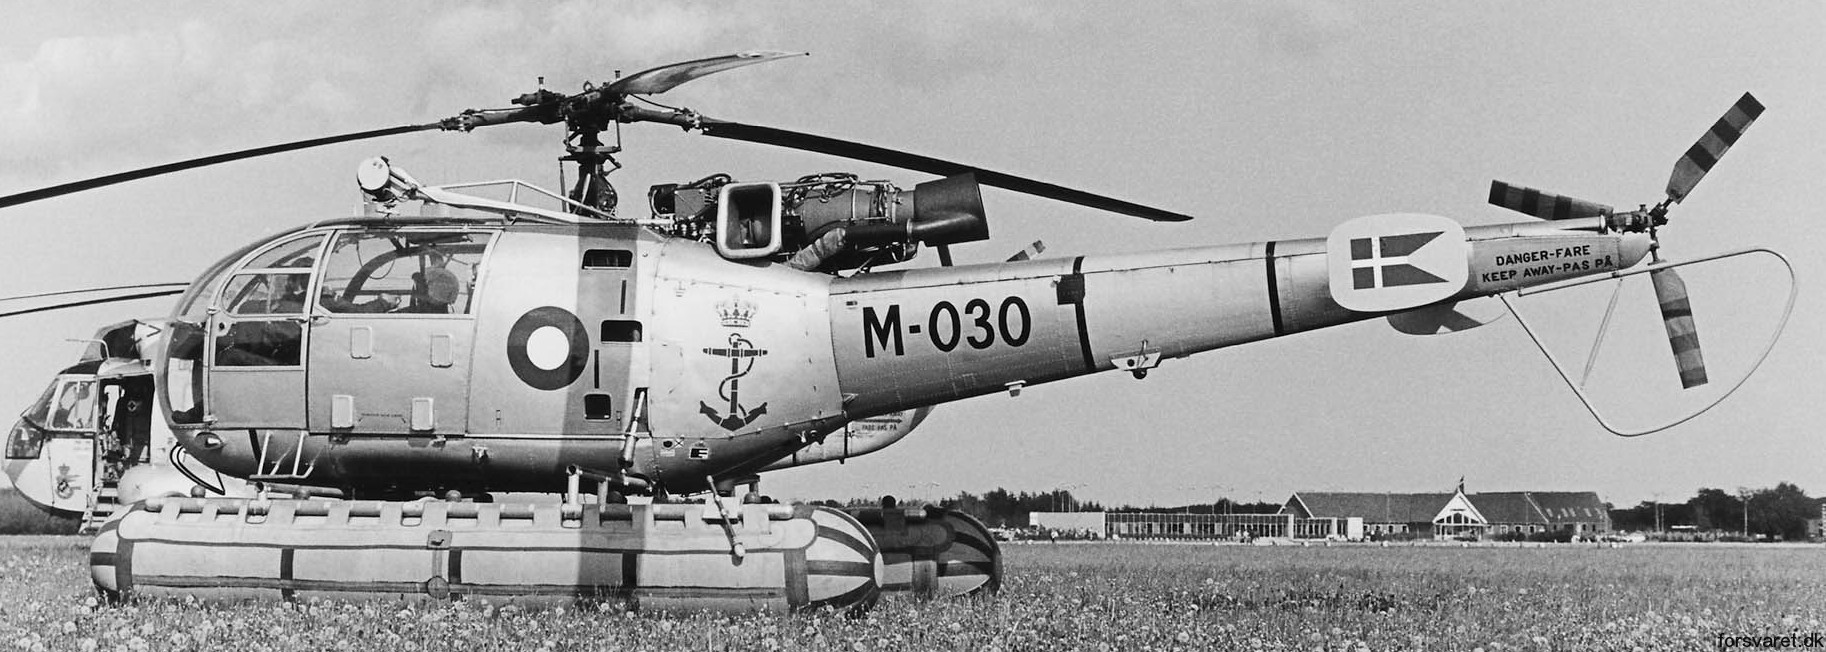 sa 316b alouette iii helicopter royal danish navy søværnet kongelige danske marine sud aviation m-030 10